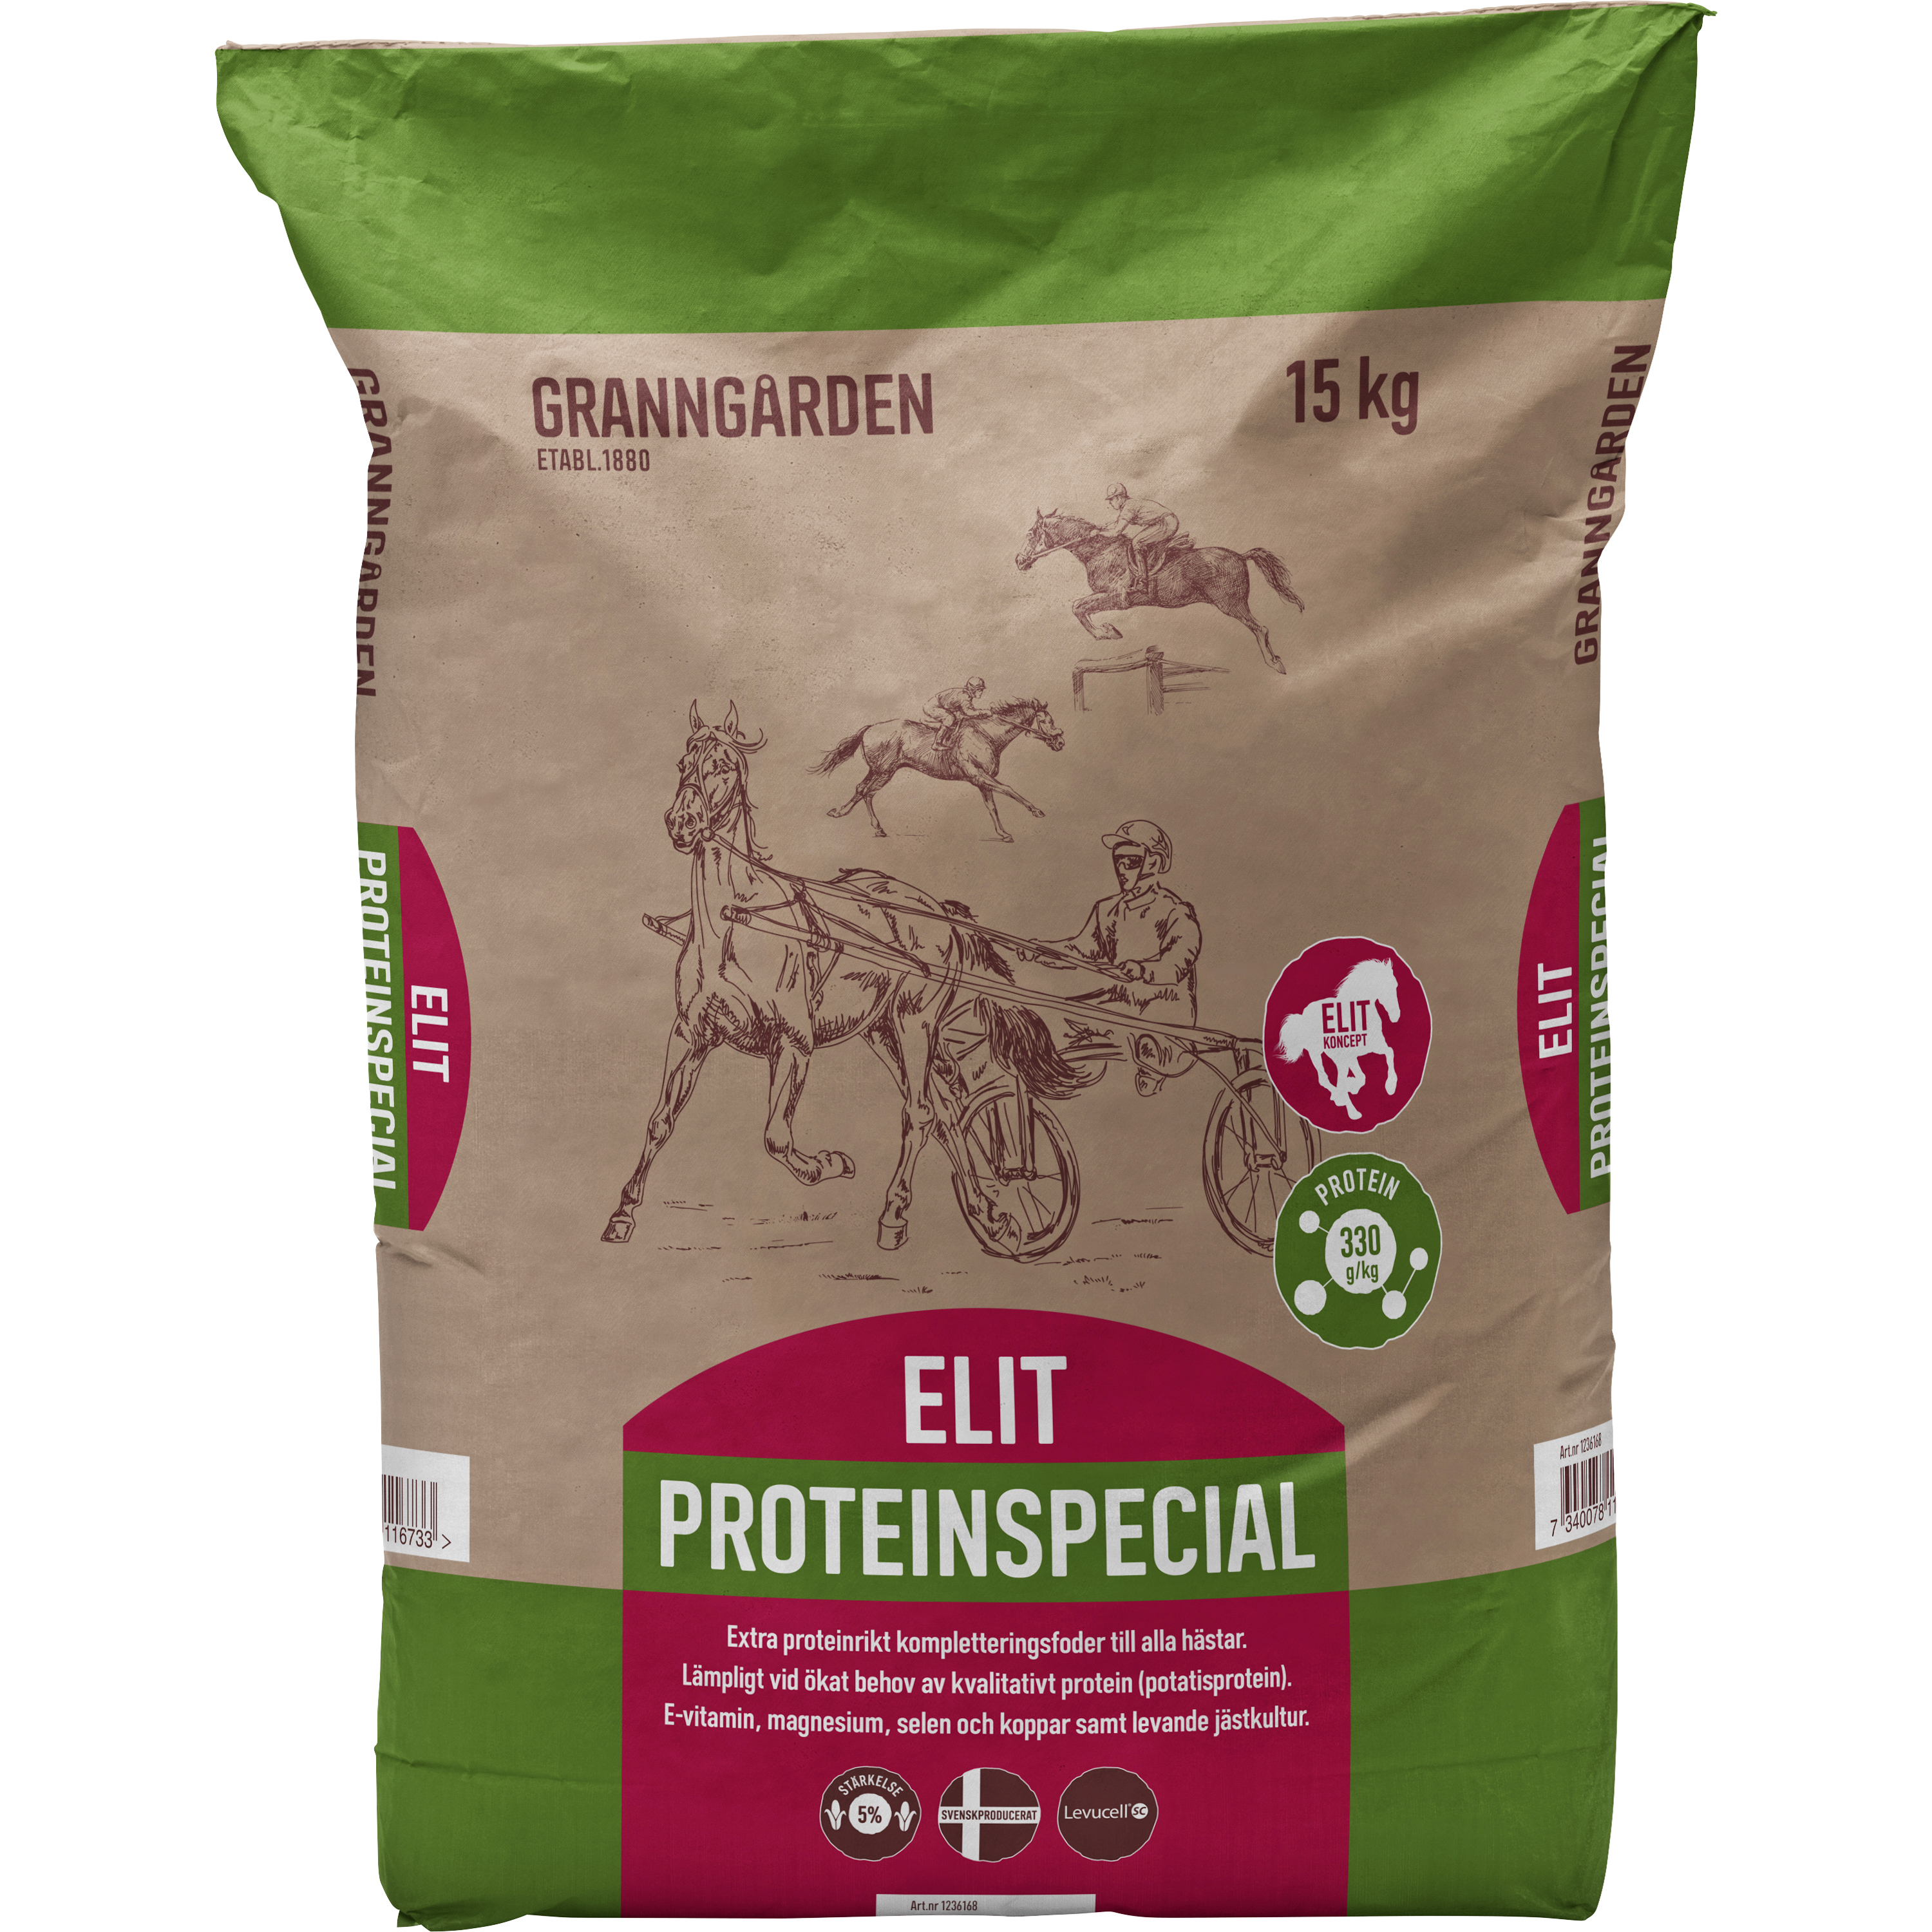 Hästfoder Granngården Elit Proteinspecial, 15 kg